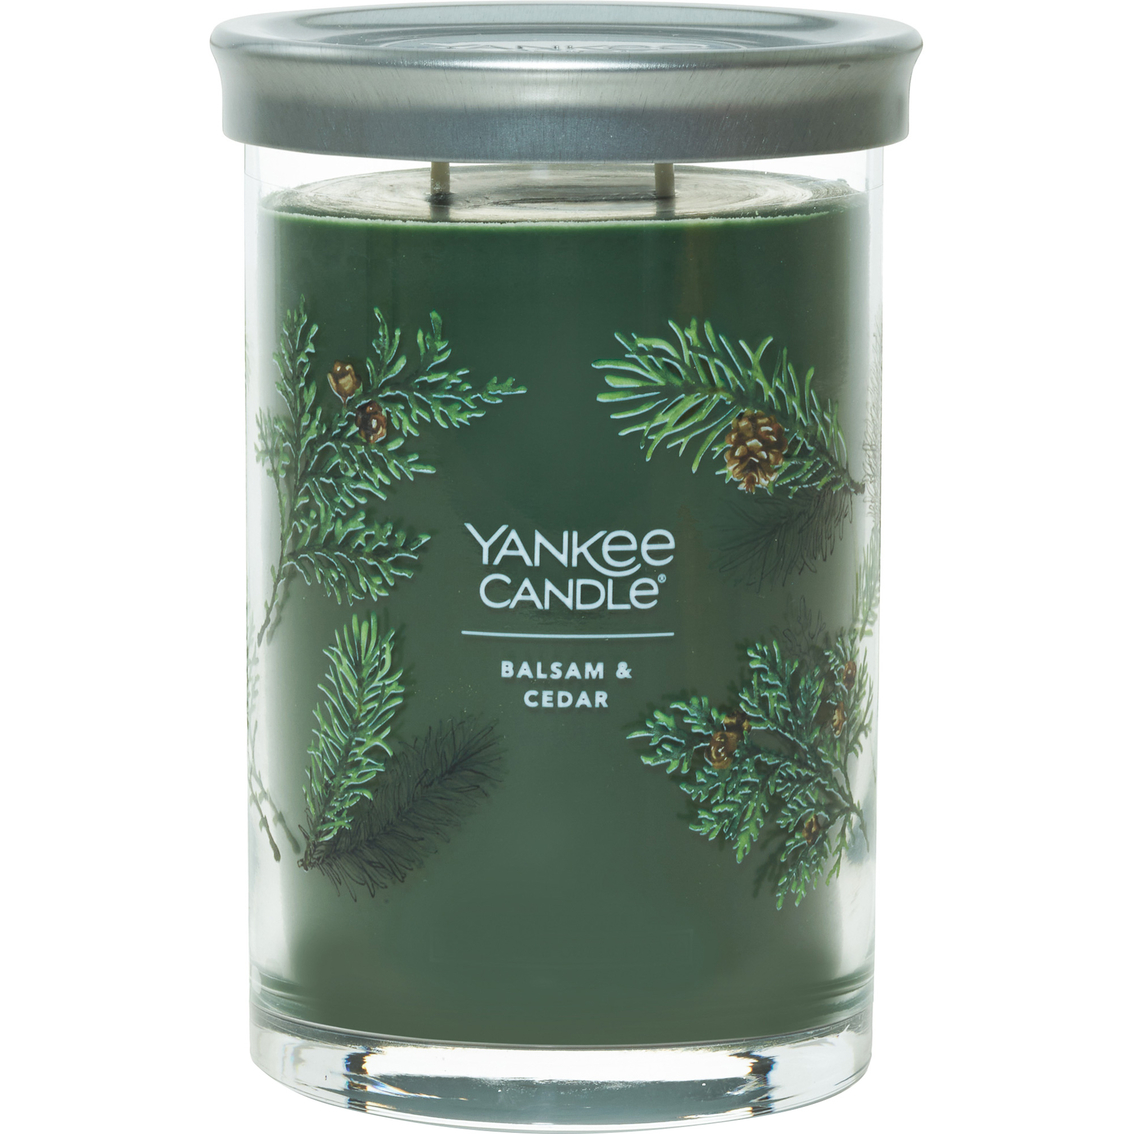 Yankee Candle Balsam & Cedar Signature Large Tumbler Candle